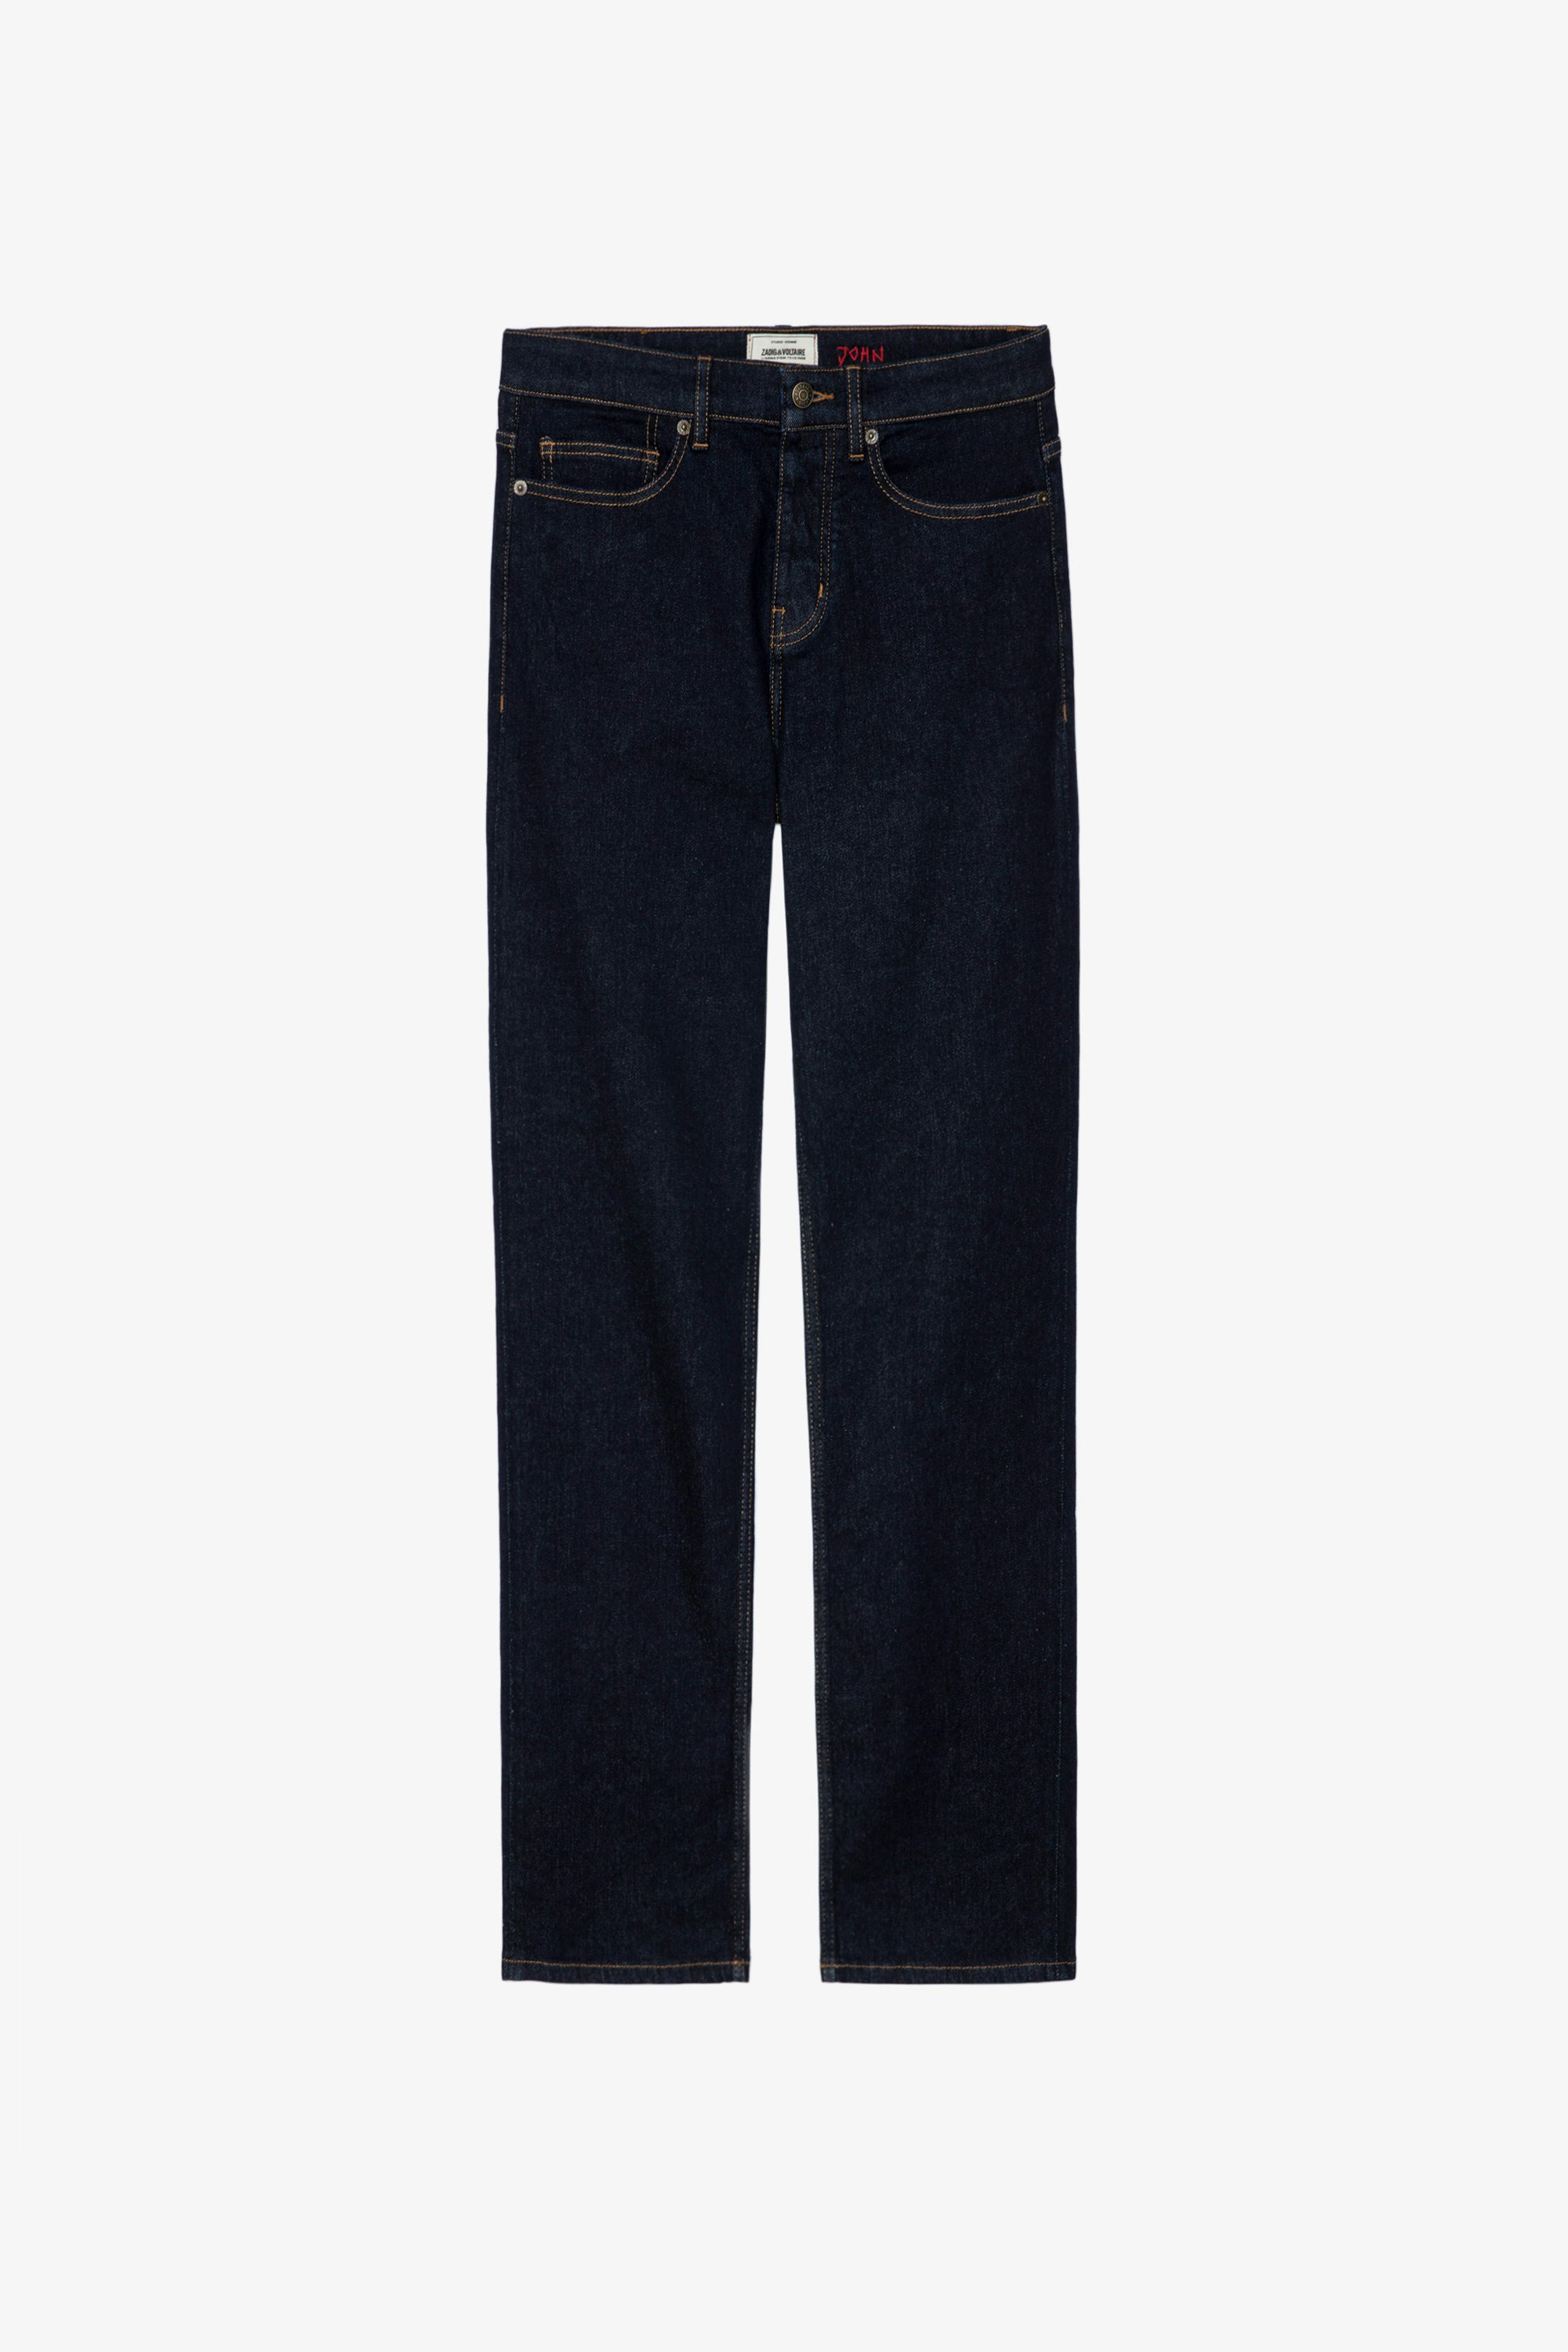 John Eco Brut Jeans Men’s straight-cut raw denim jeans